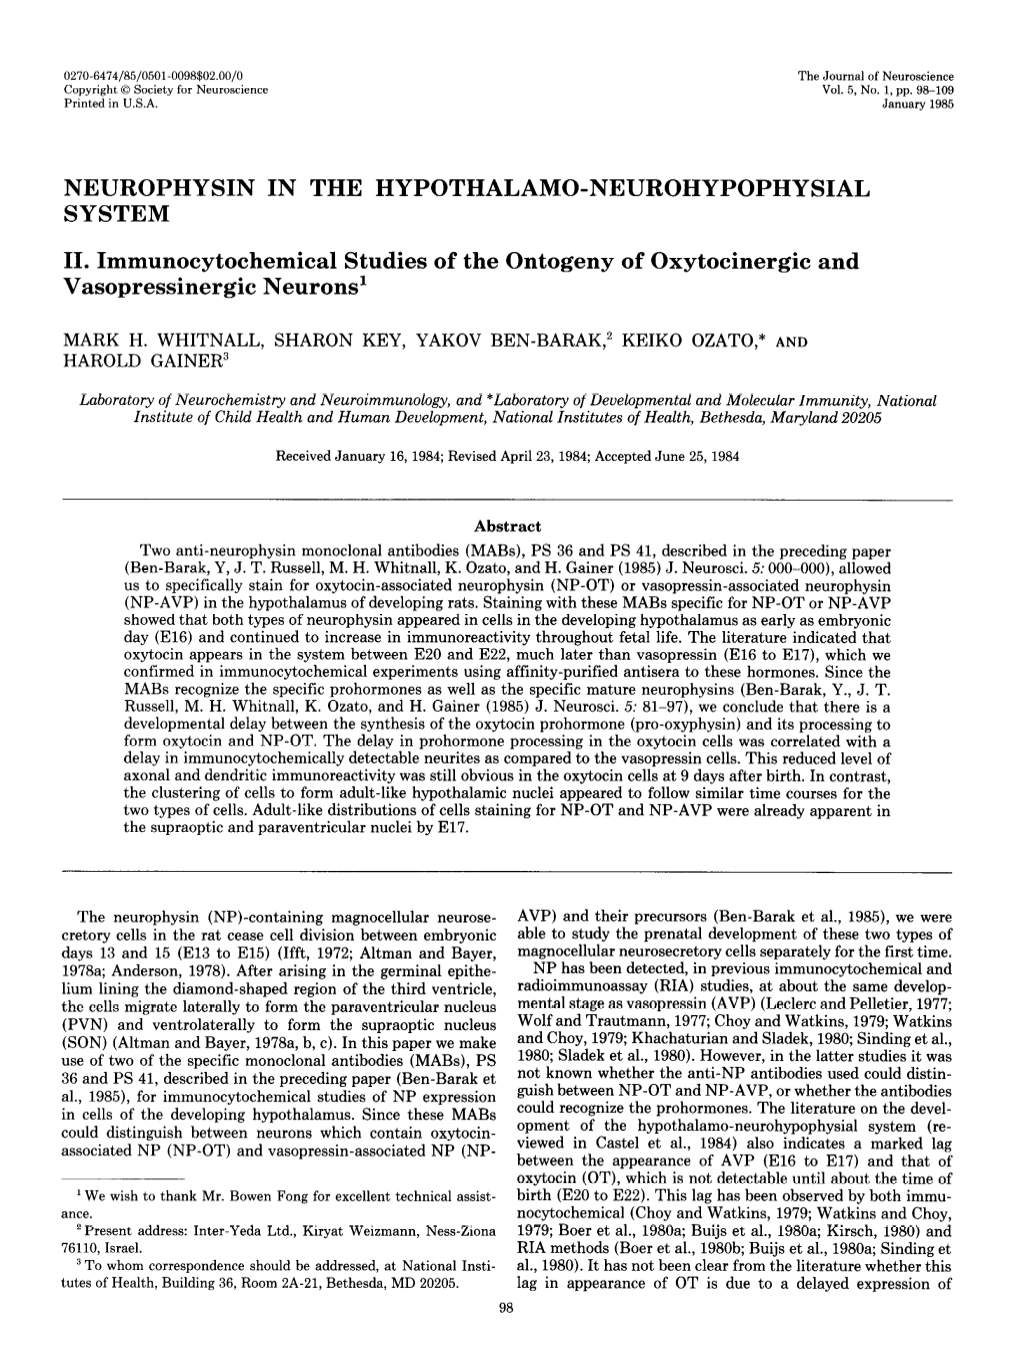 Neurophysin in the Hypothalamo-Neurohypophysial System